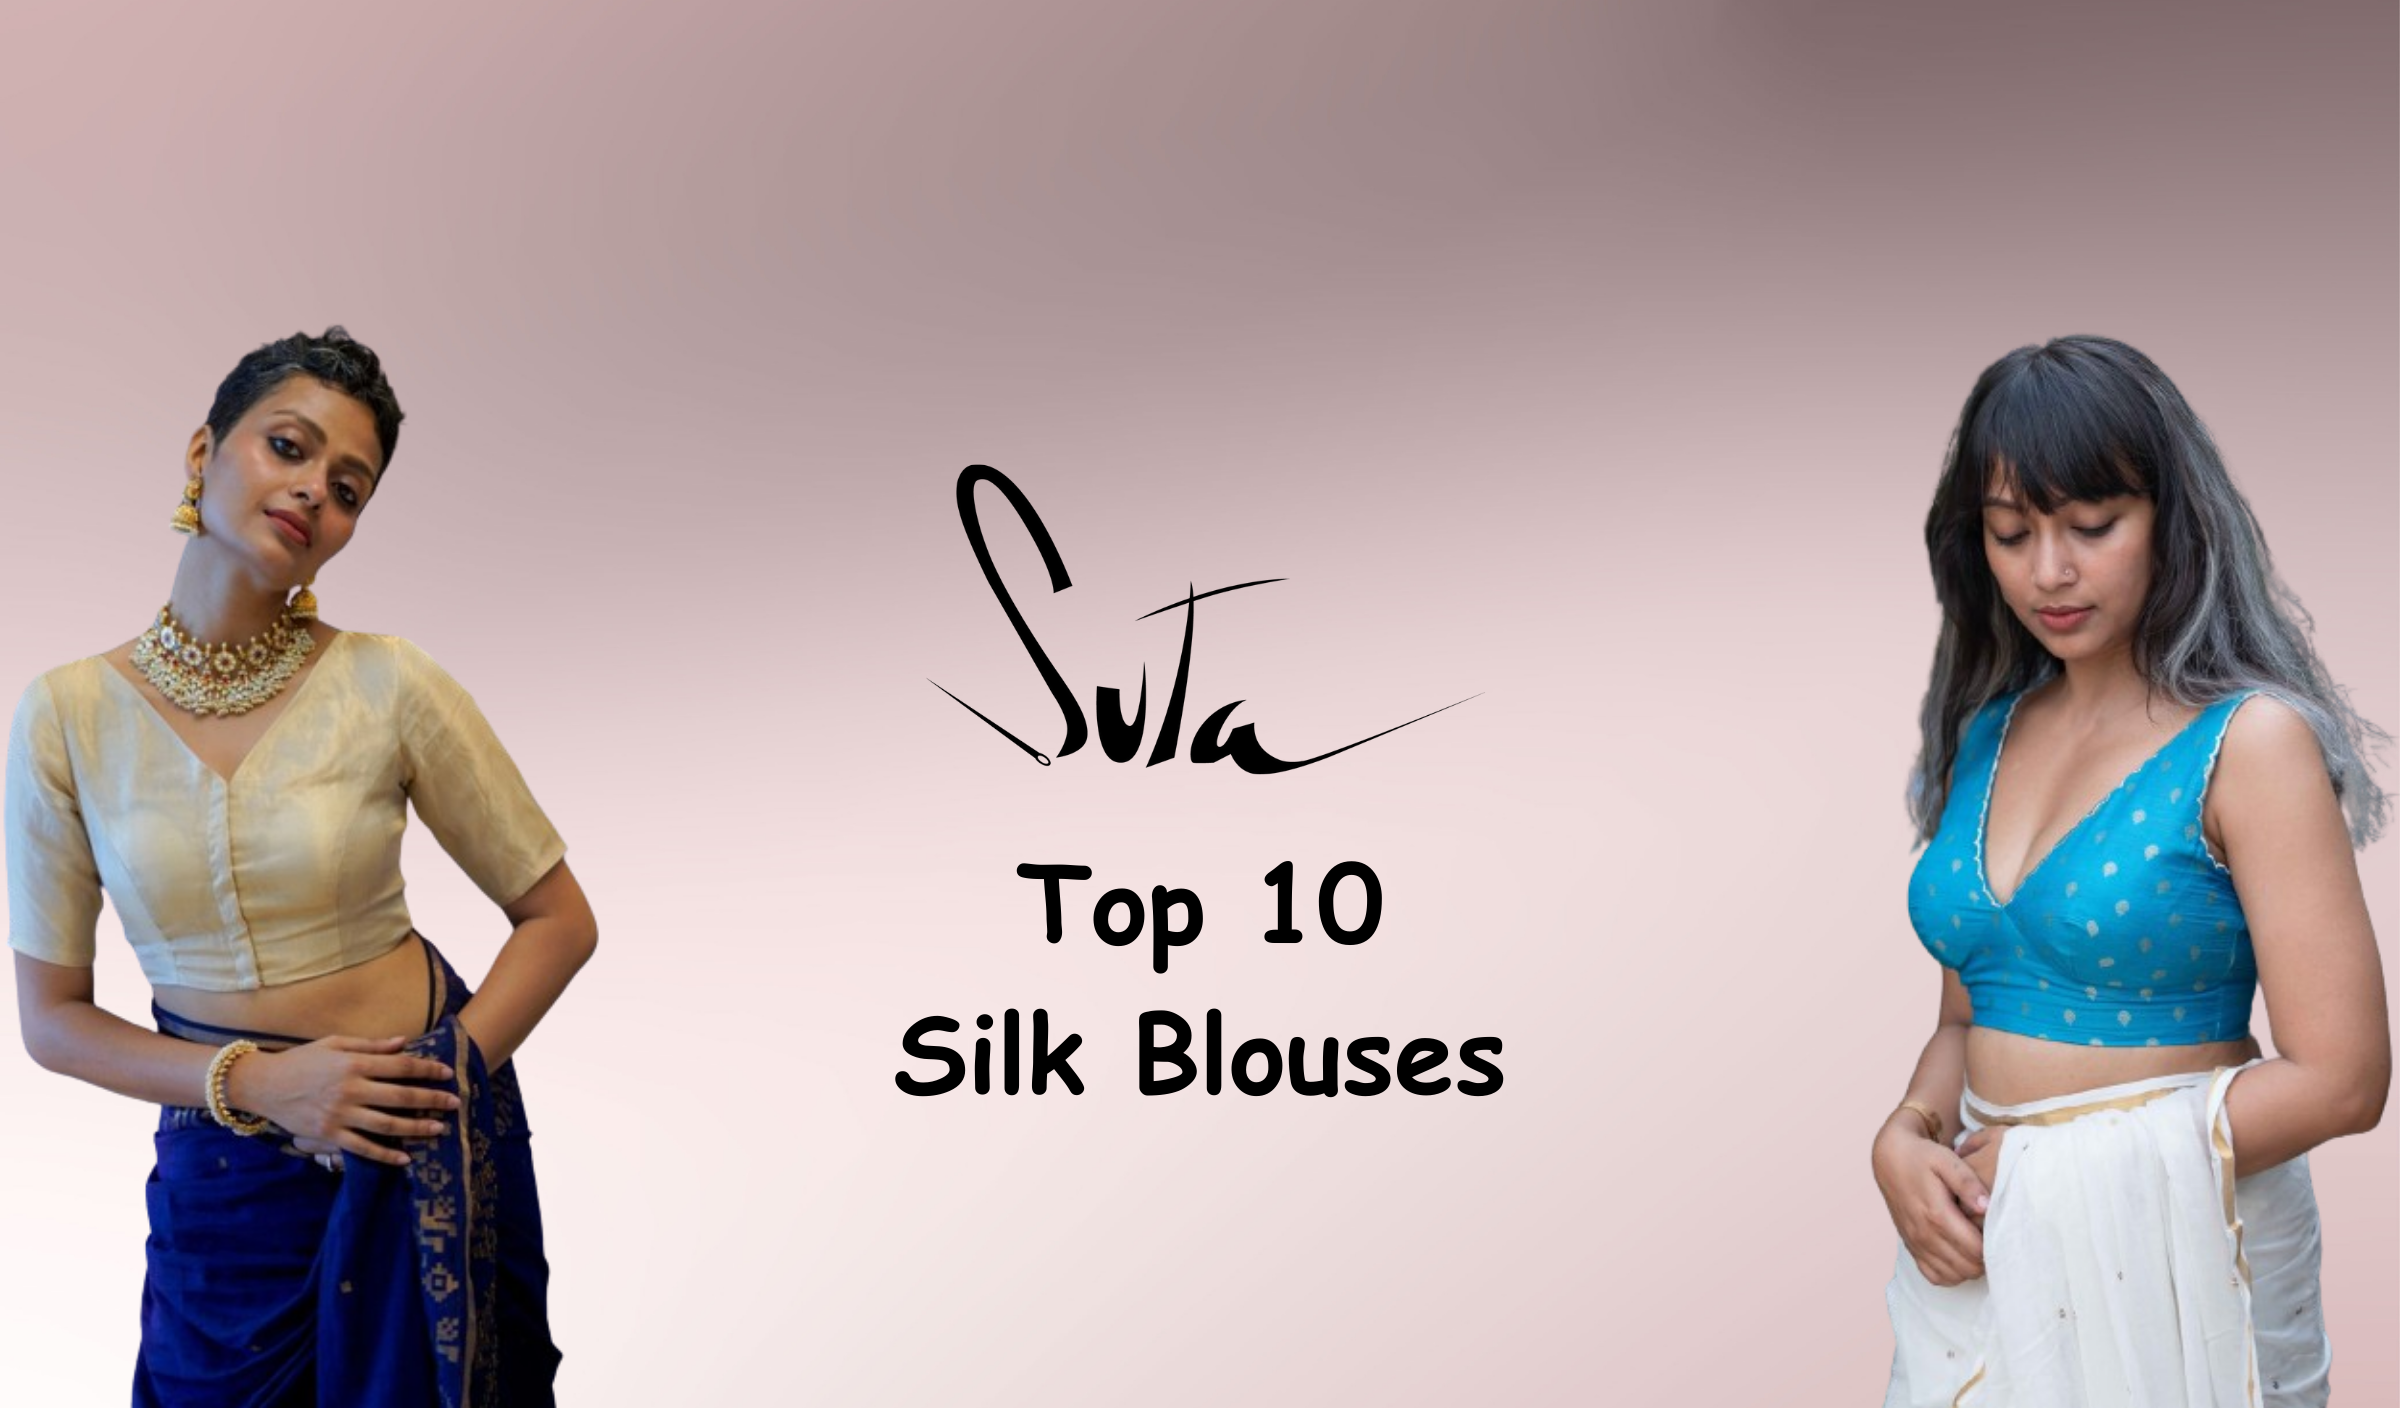 Luxurious Elegance: Top 10 Silk Blouses from Suta